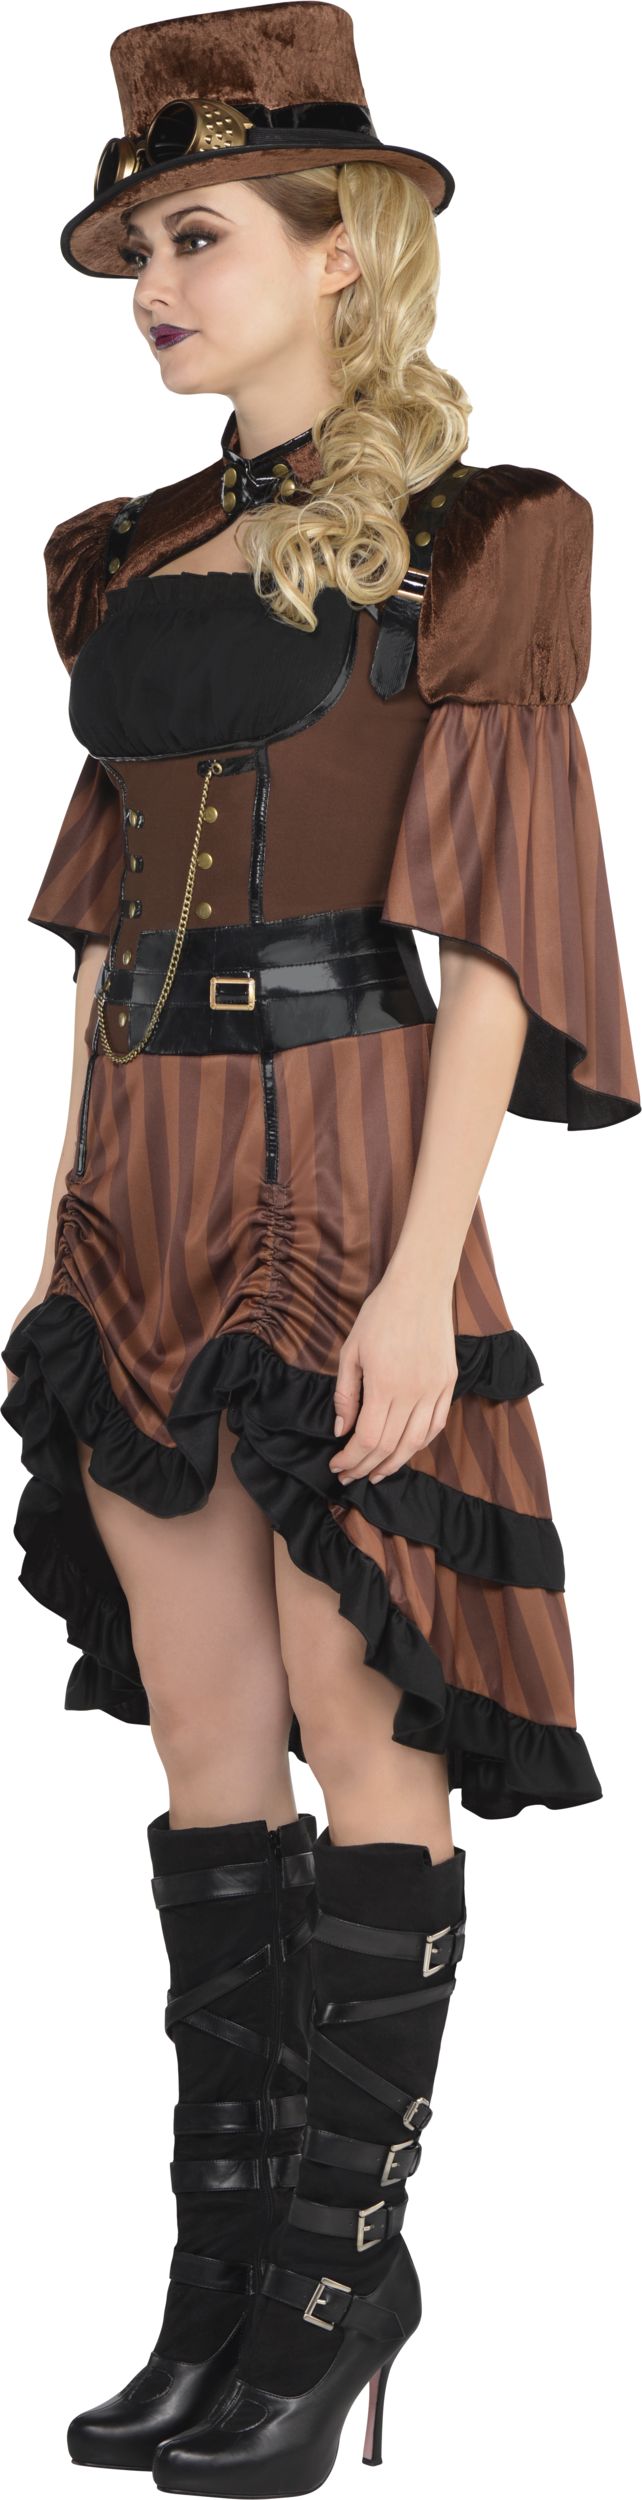 Costume Steampunk sexy pour femmes, robe brune style corset, veste